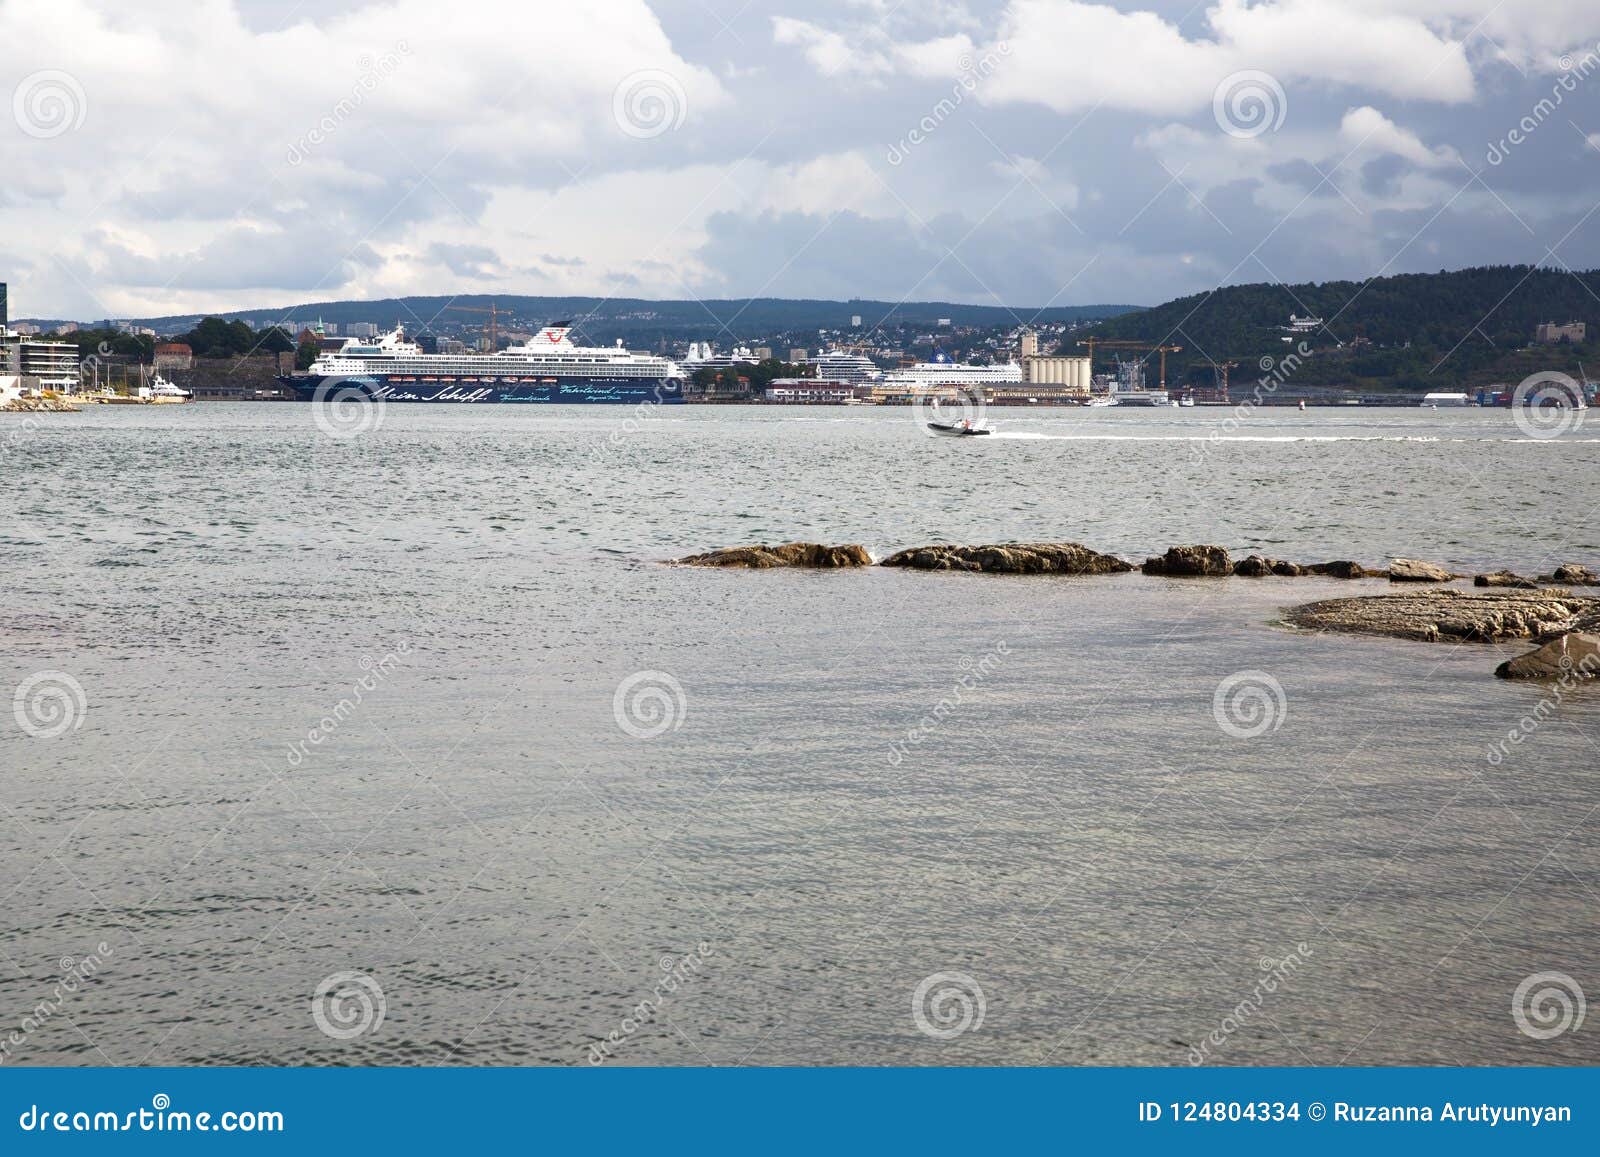 Coastline in Oslo editorial stock image. Image of blue - 124804334